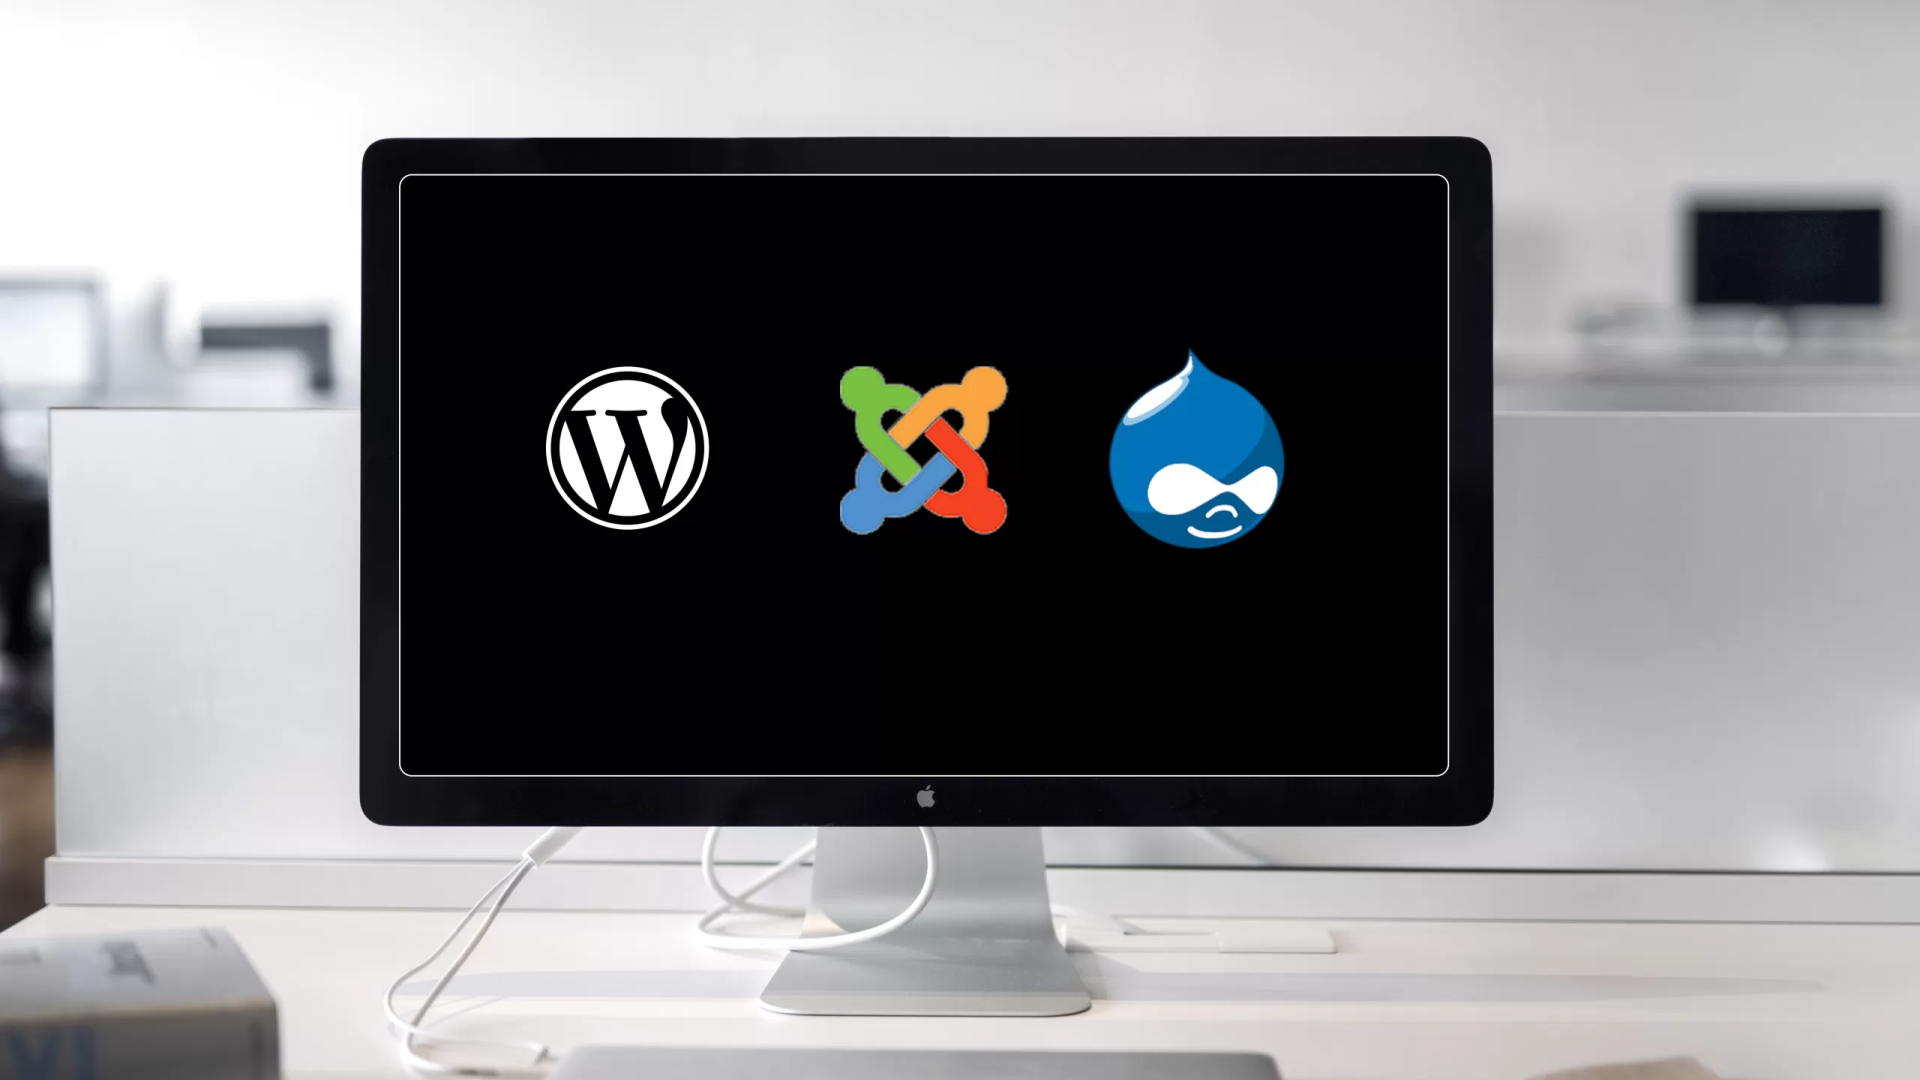 Logos of WordPress, Joomla and Drupal